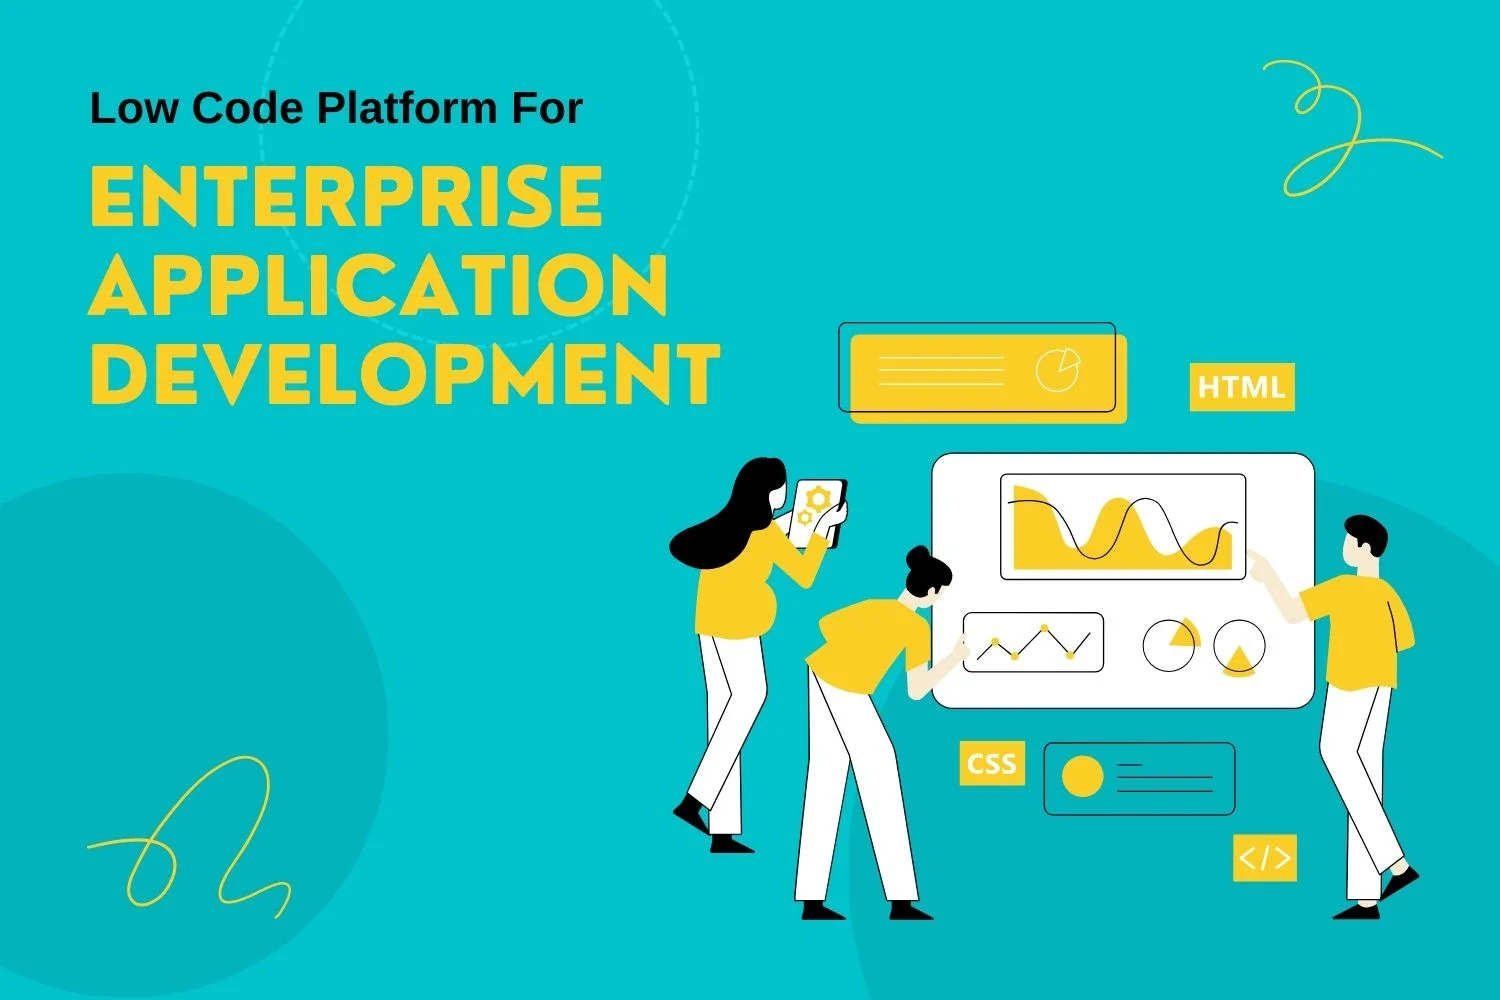 Low Code Platforms for Enterprise Application Development